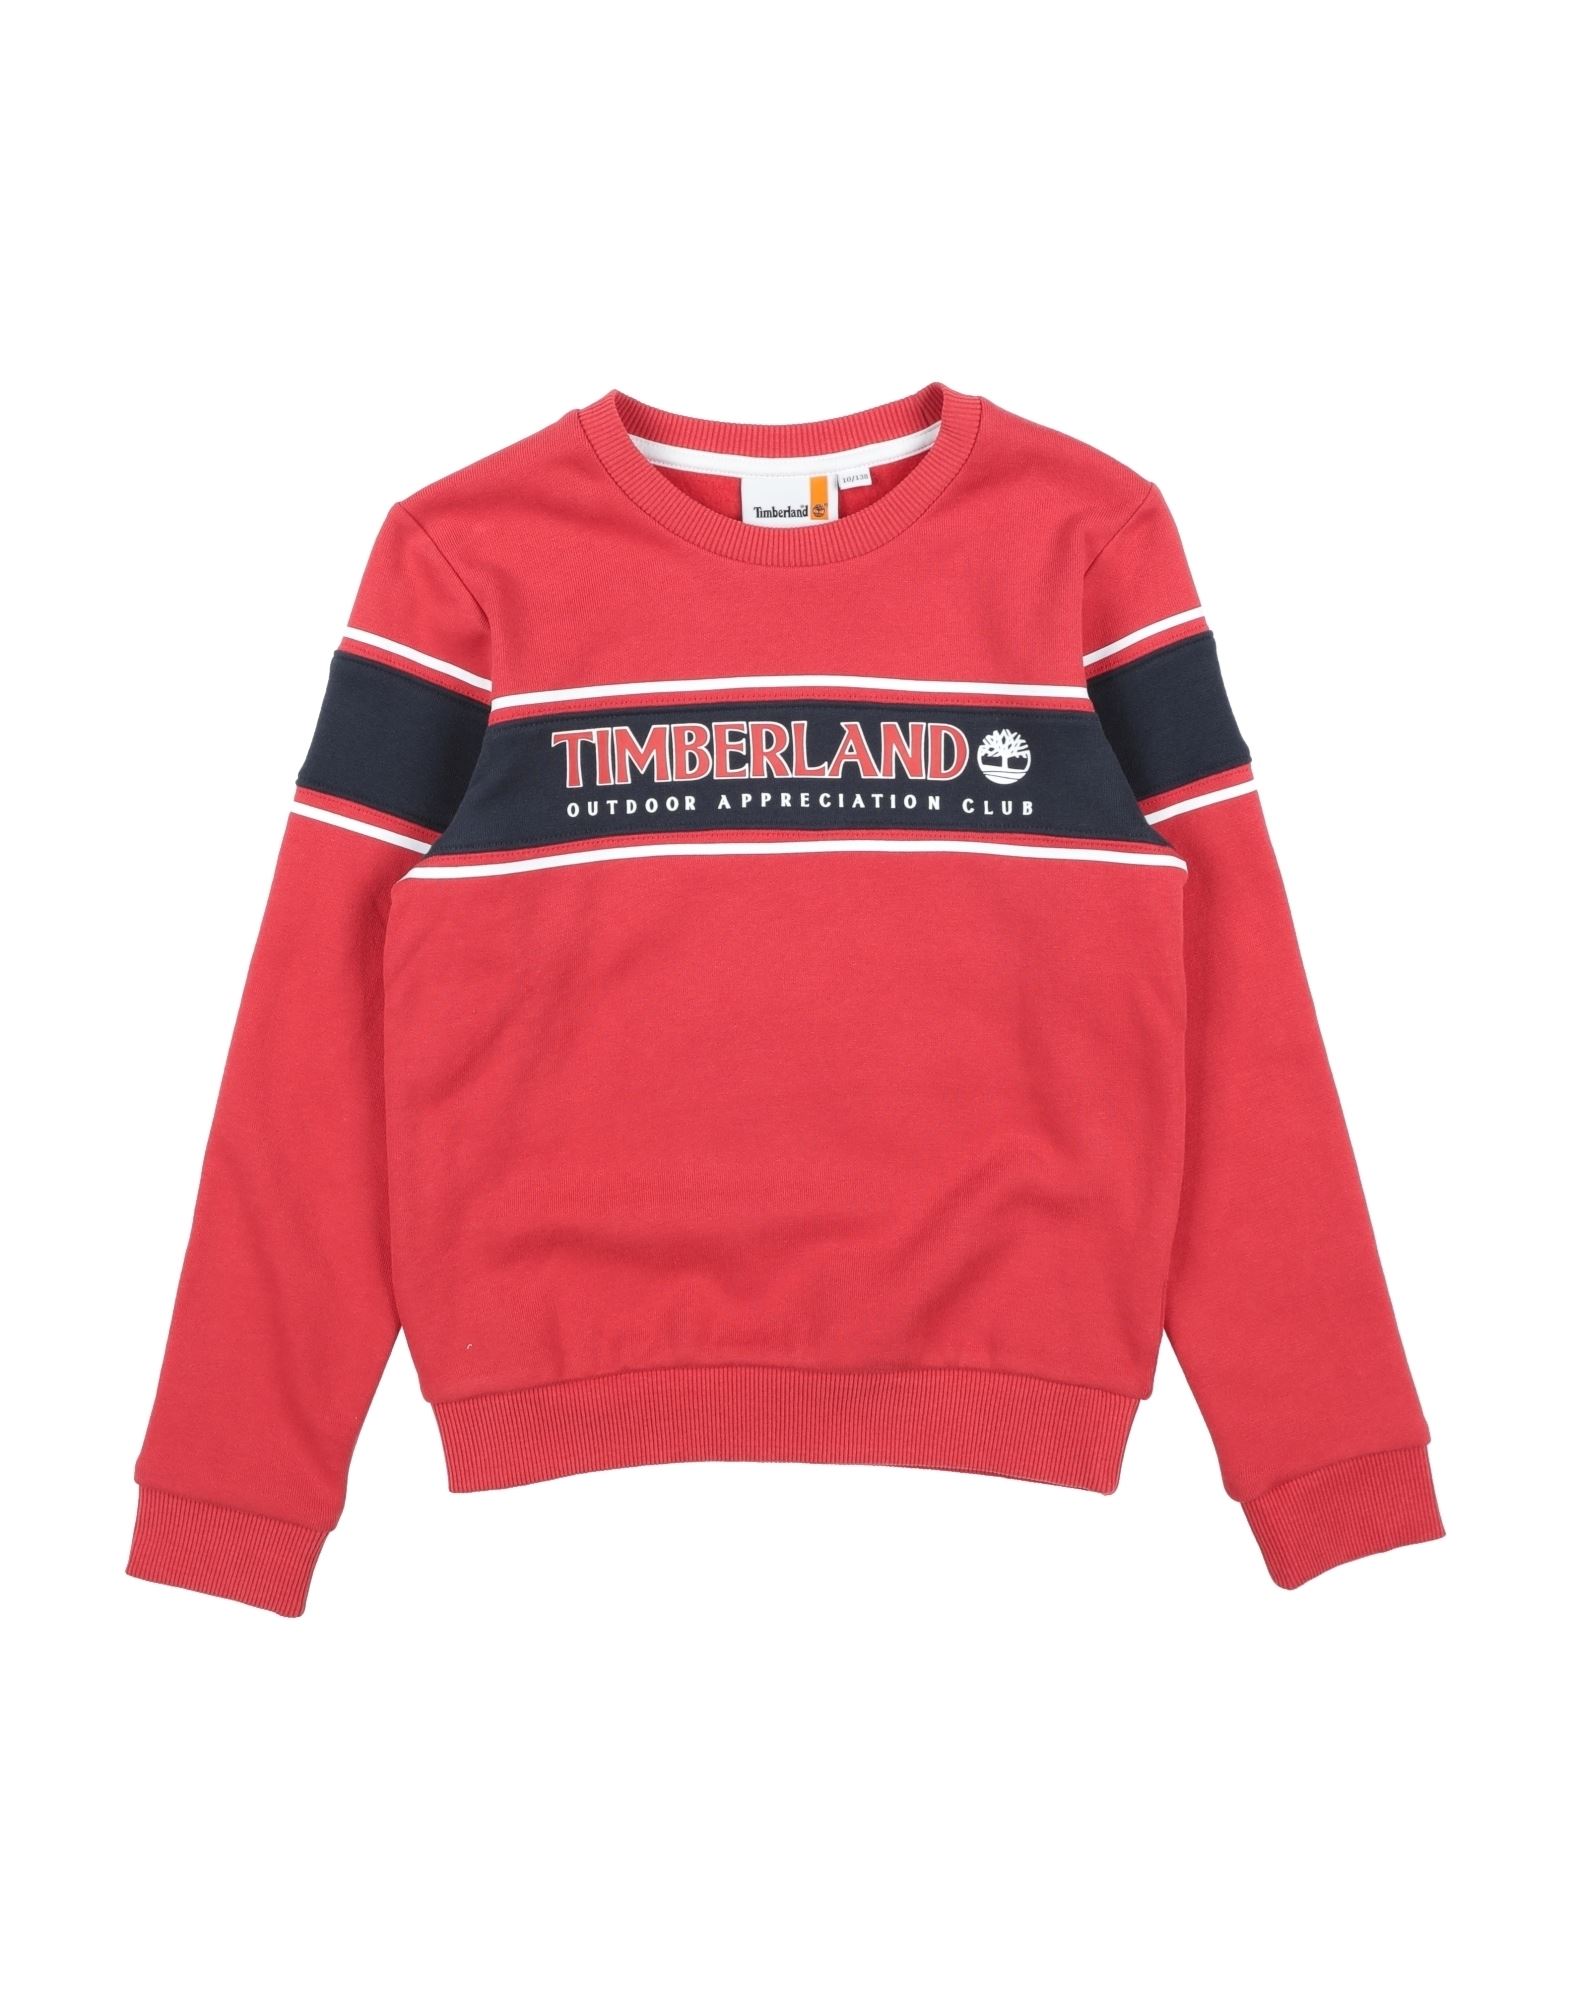 TIMBERLAND Sweatshirt Kinder Rot von TIMBERLAND